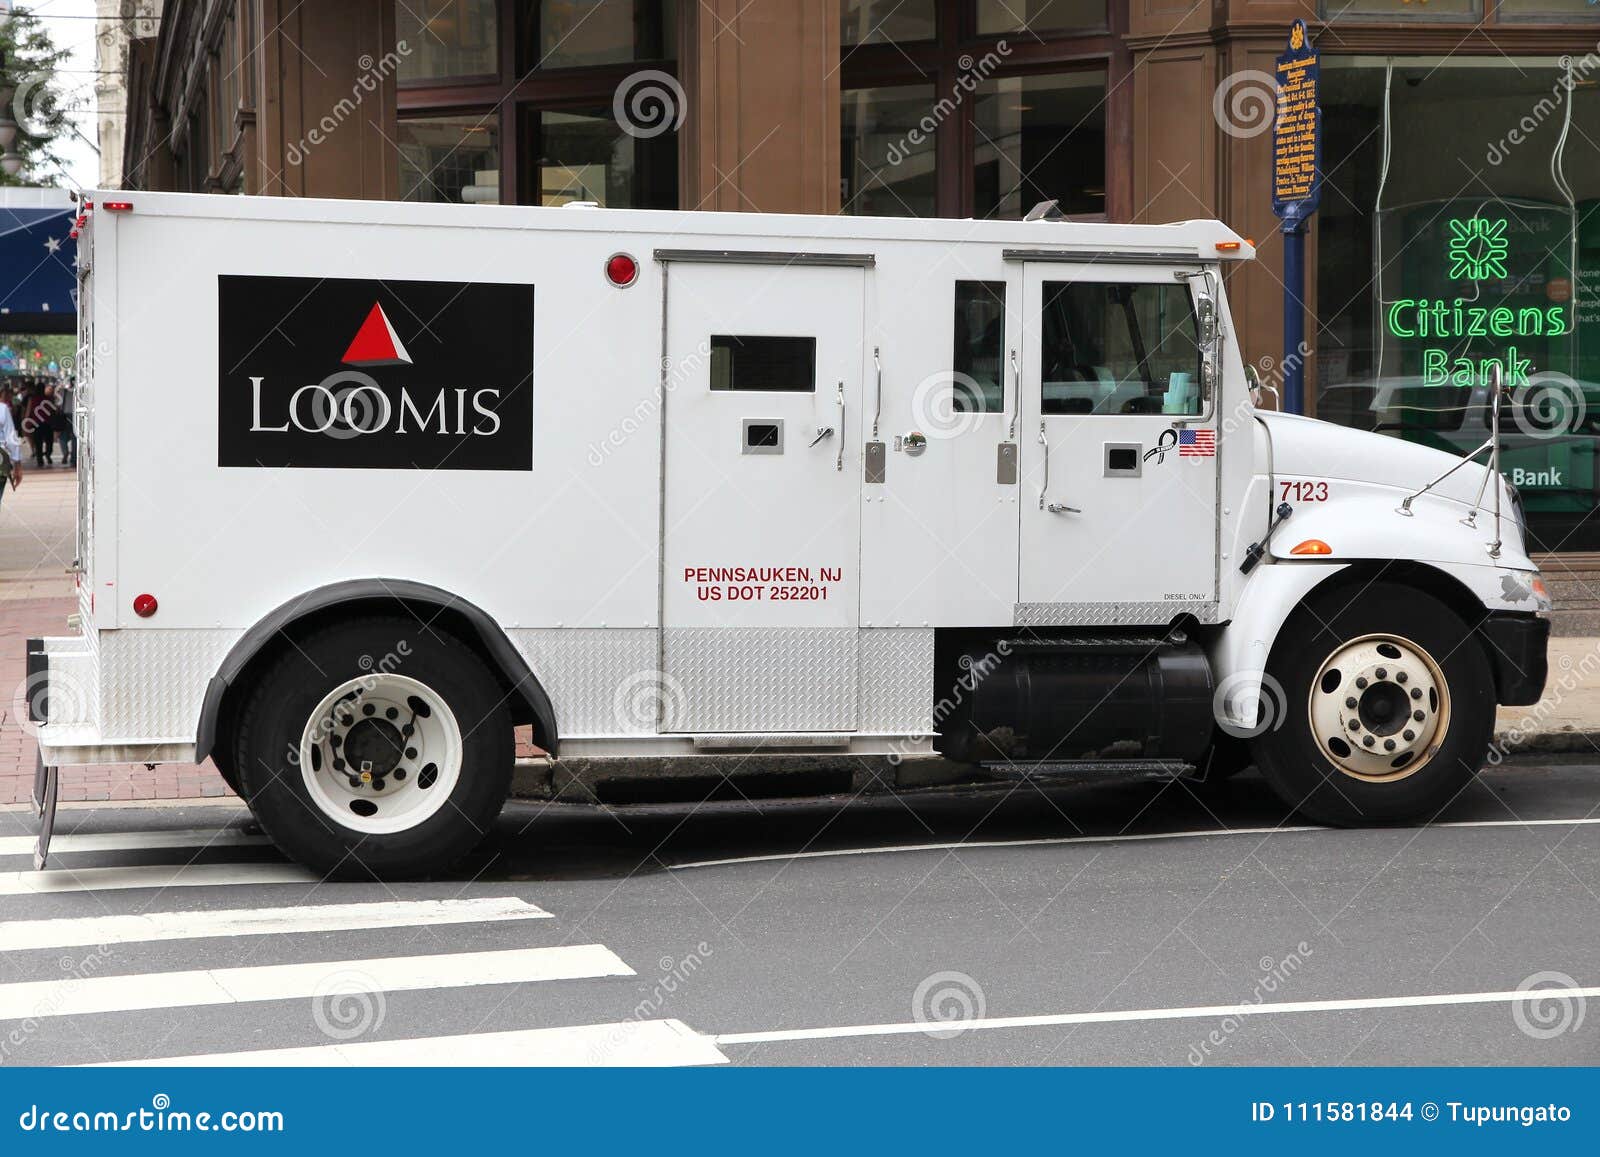 Loomis money truck editorial stock image. Image of freightliner - 111581844